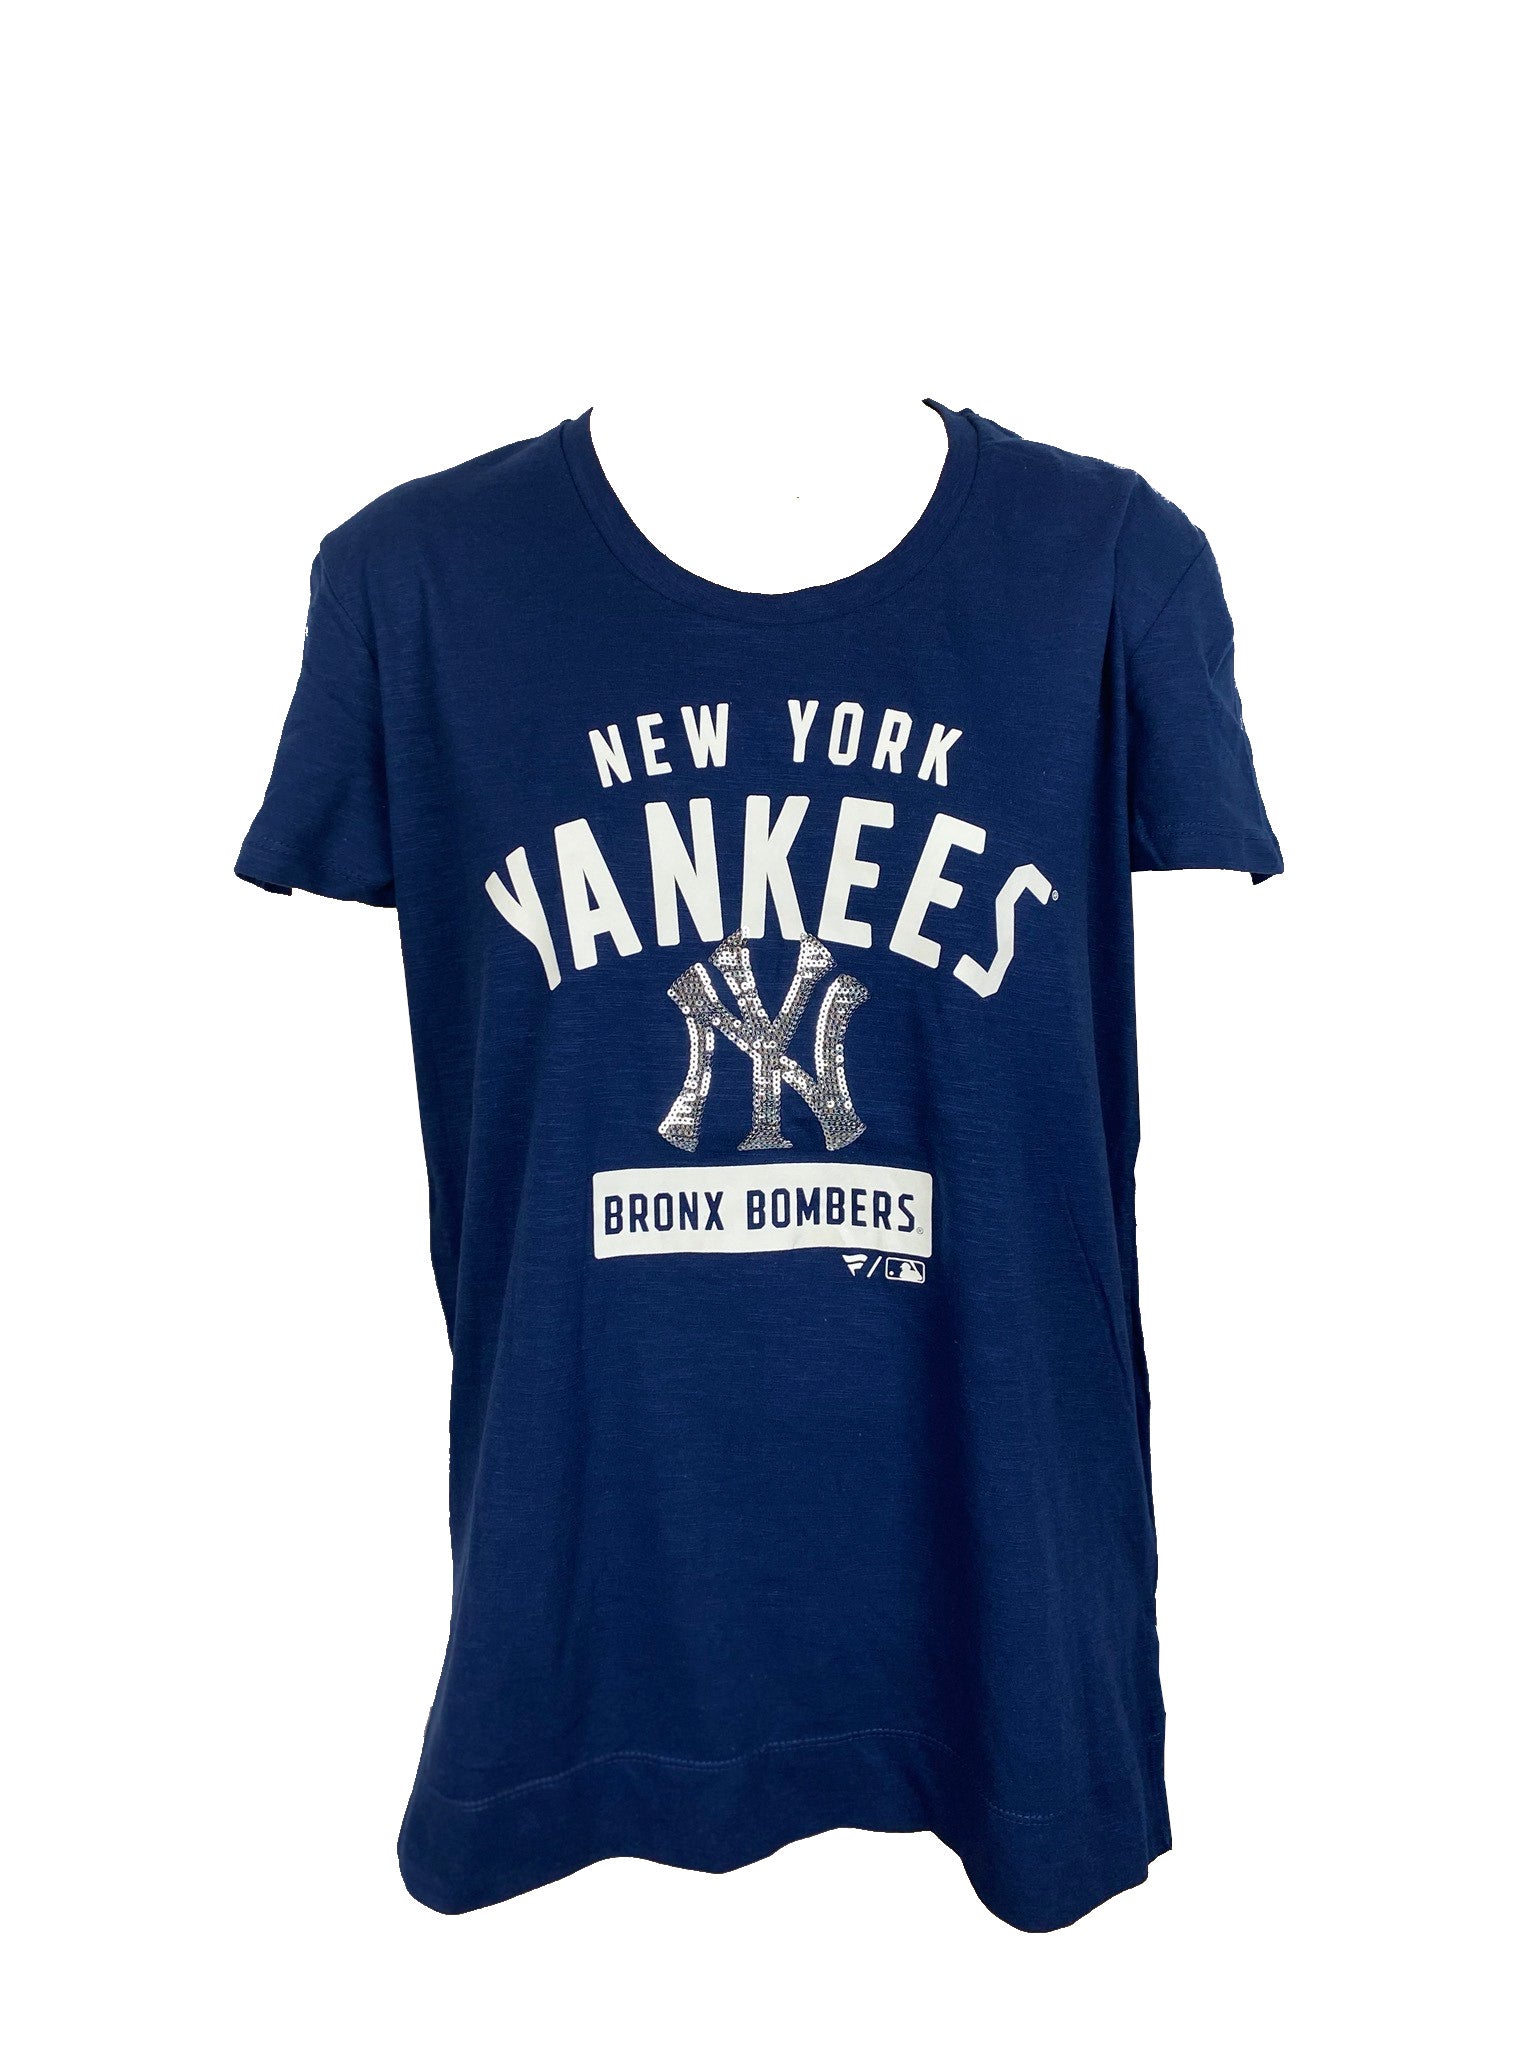 New York Yankees Ladies Baseball Jerseys, Ladies Yankees Jerseys